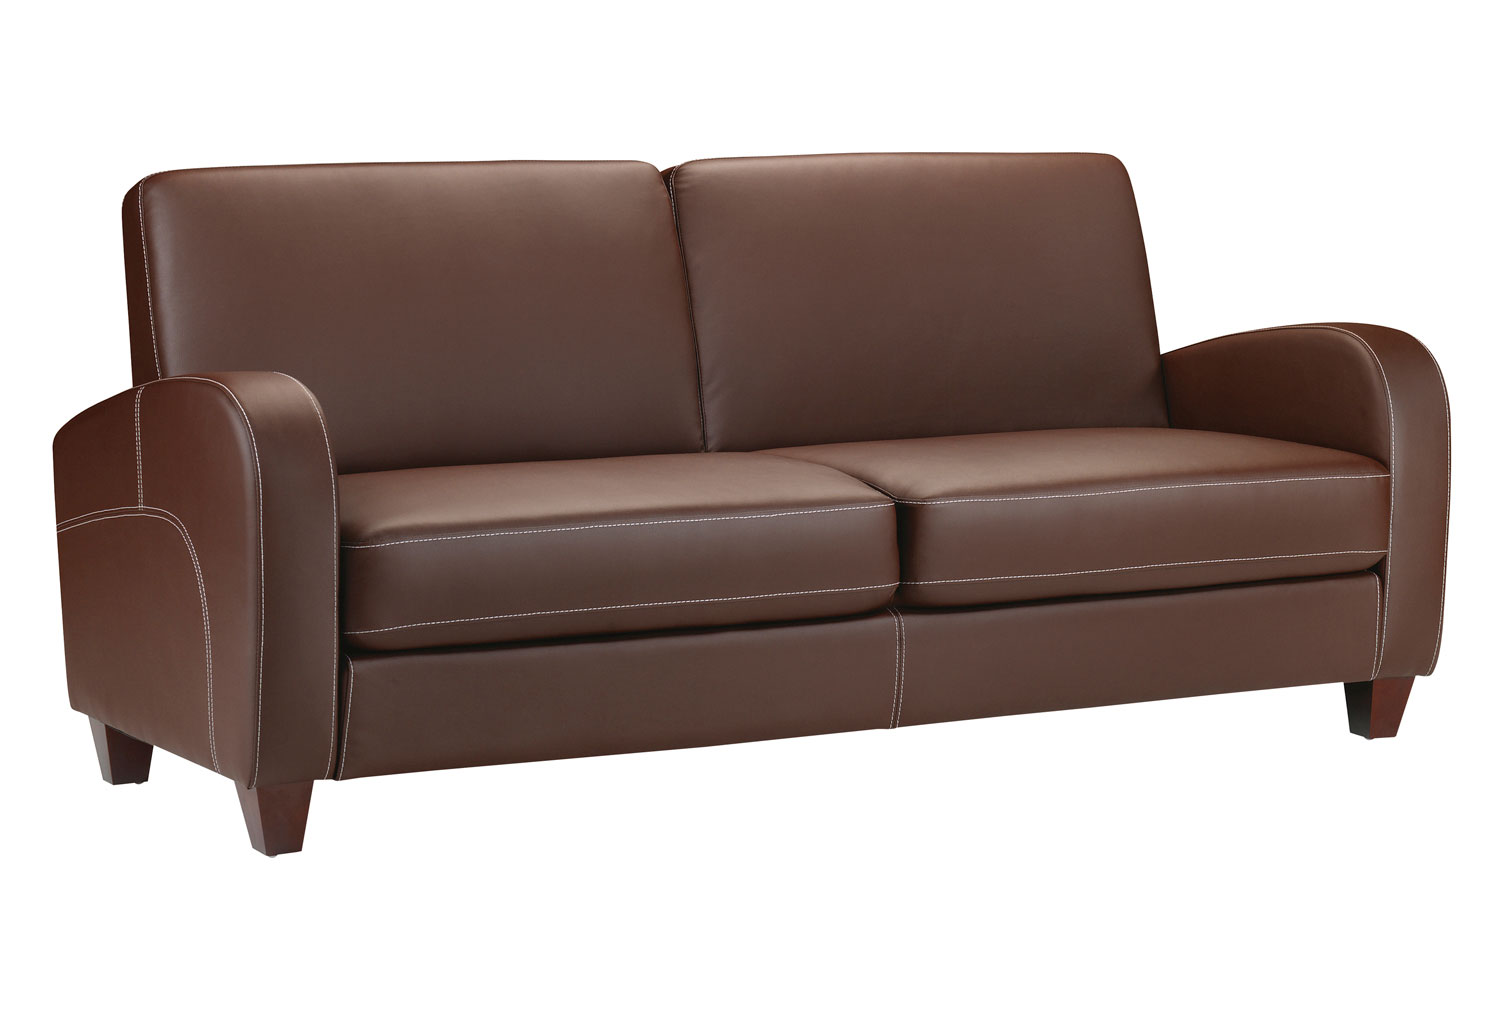 Donovan Faux Leather 3 Seater Sofa